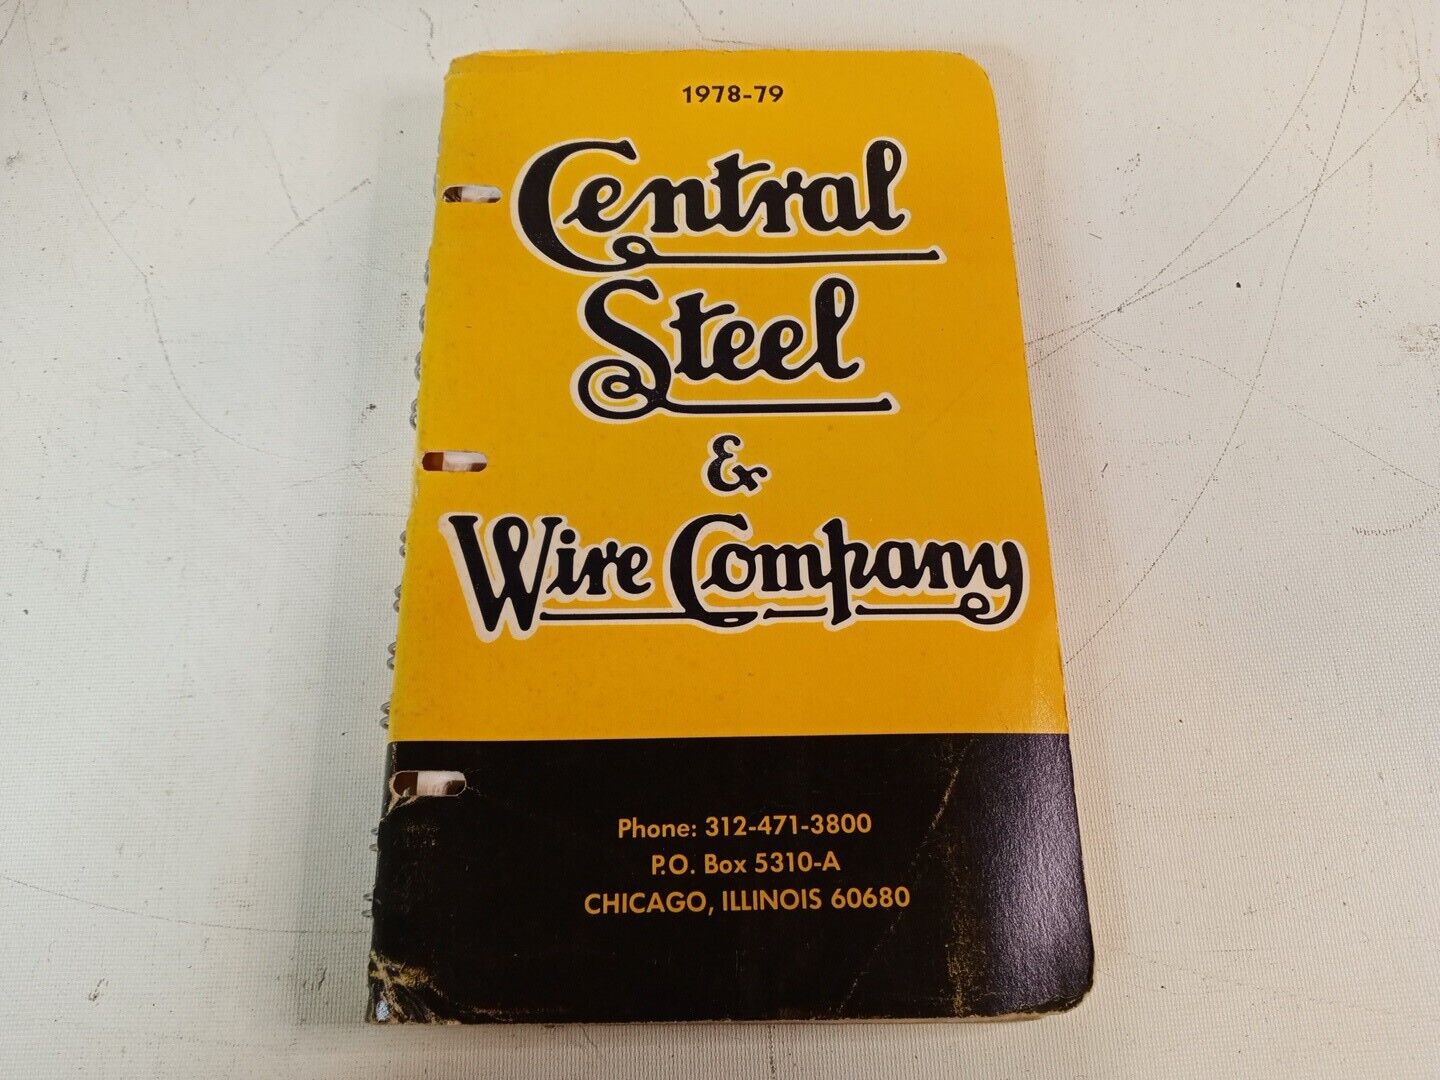 1978-79 Central Steel & Wire Company Chicago Illinois Catalog